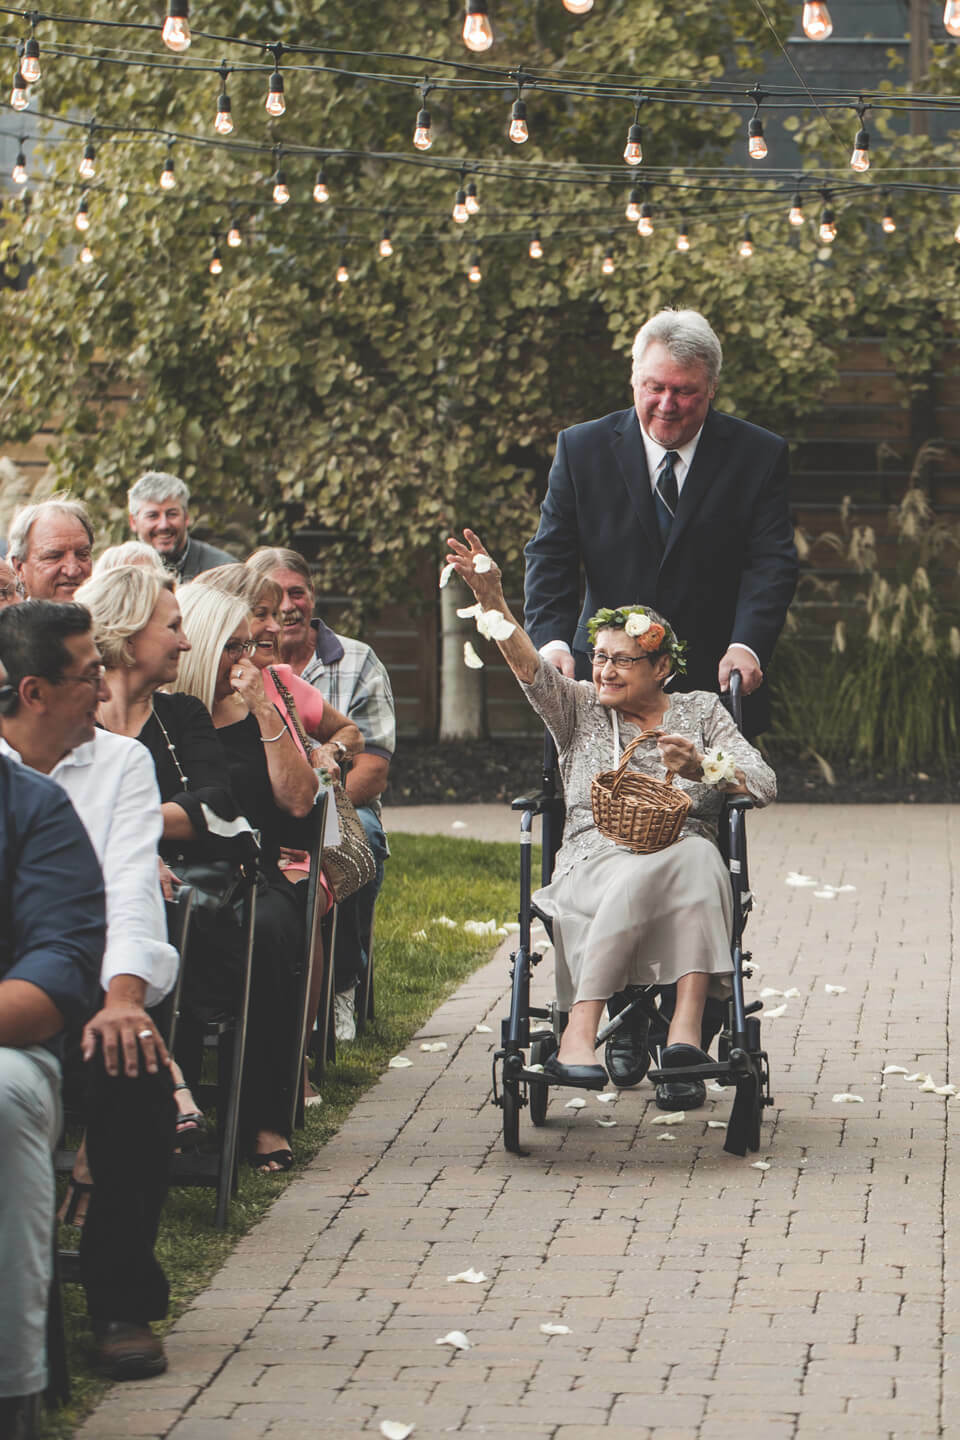 Flower grandma in floral crown sprinkles petals down the aisle from her wheelchair